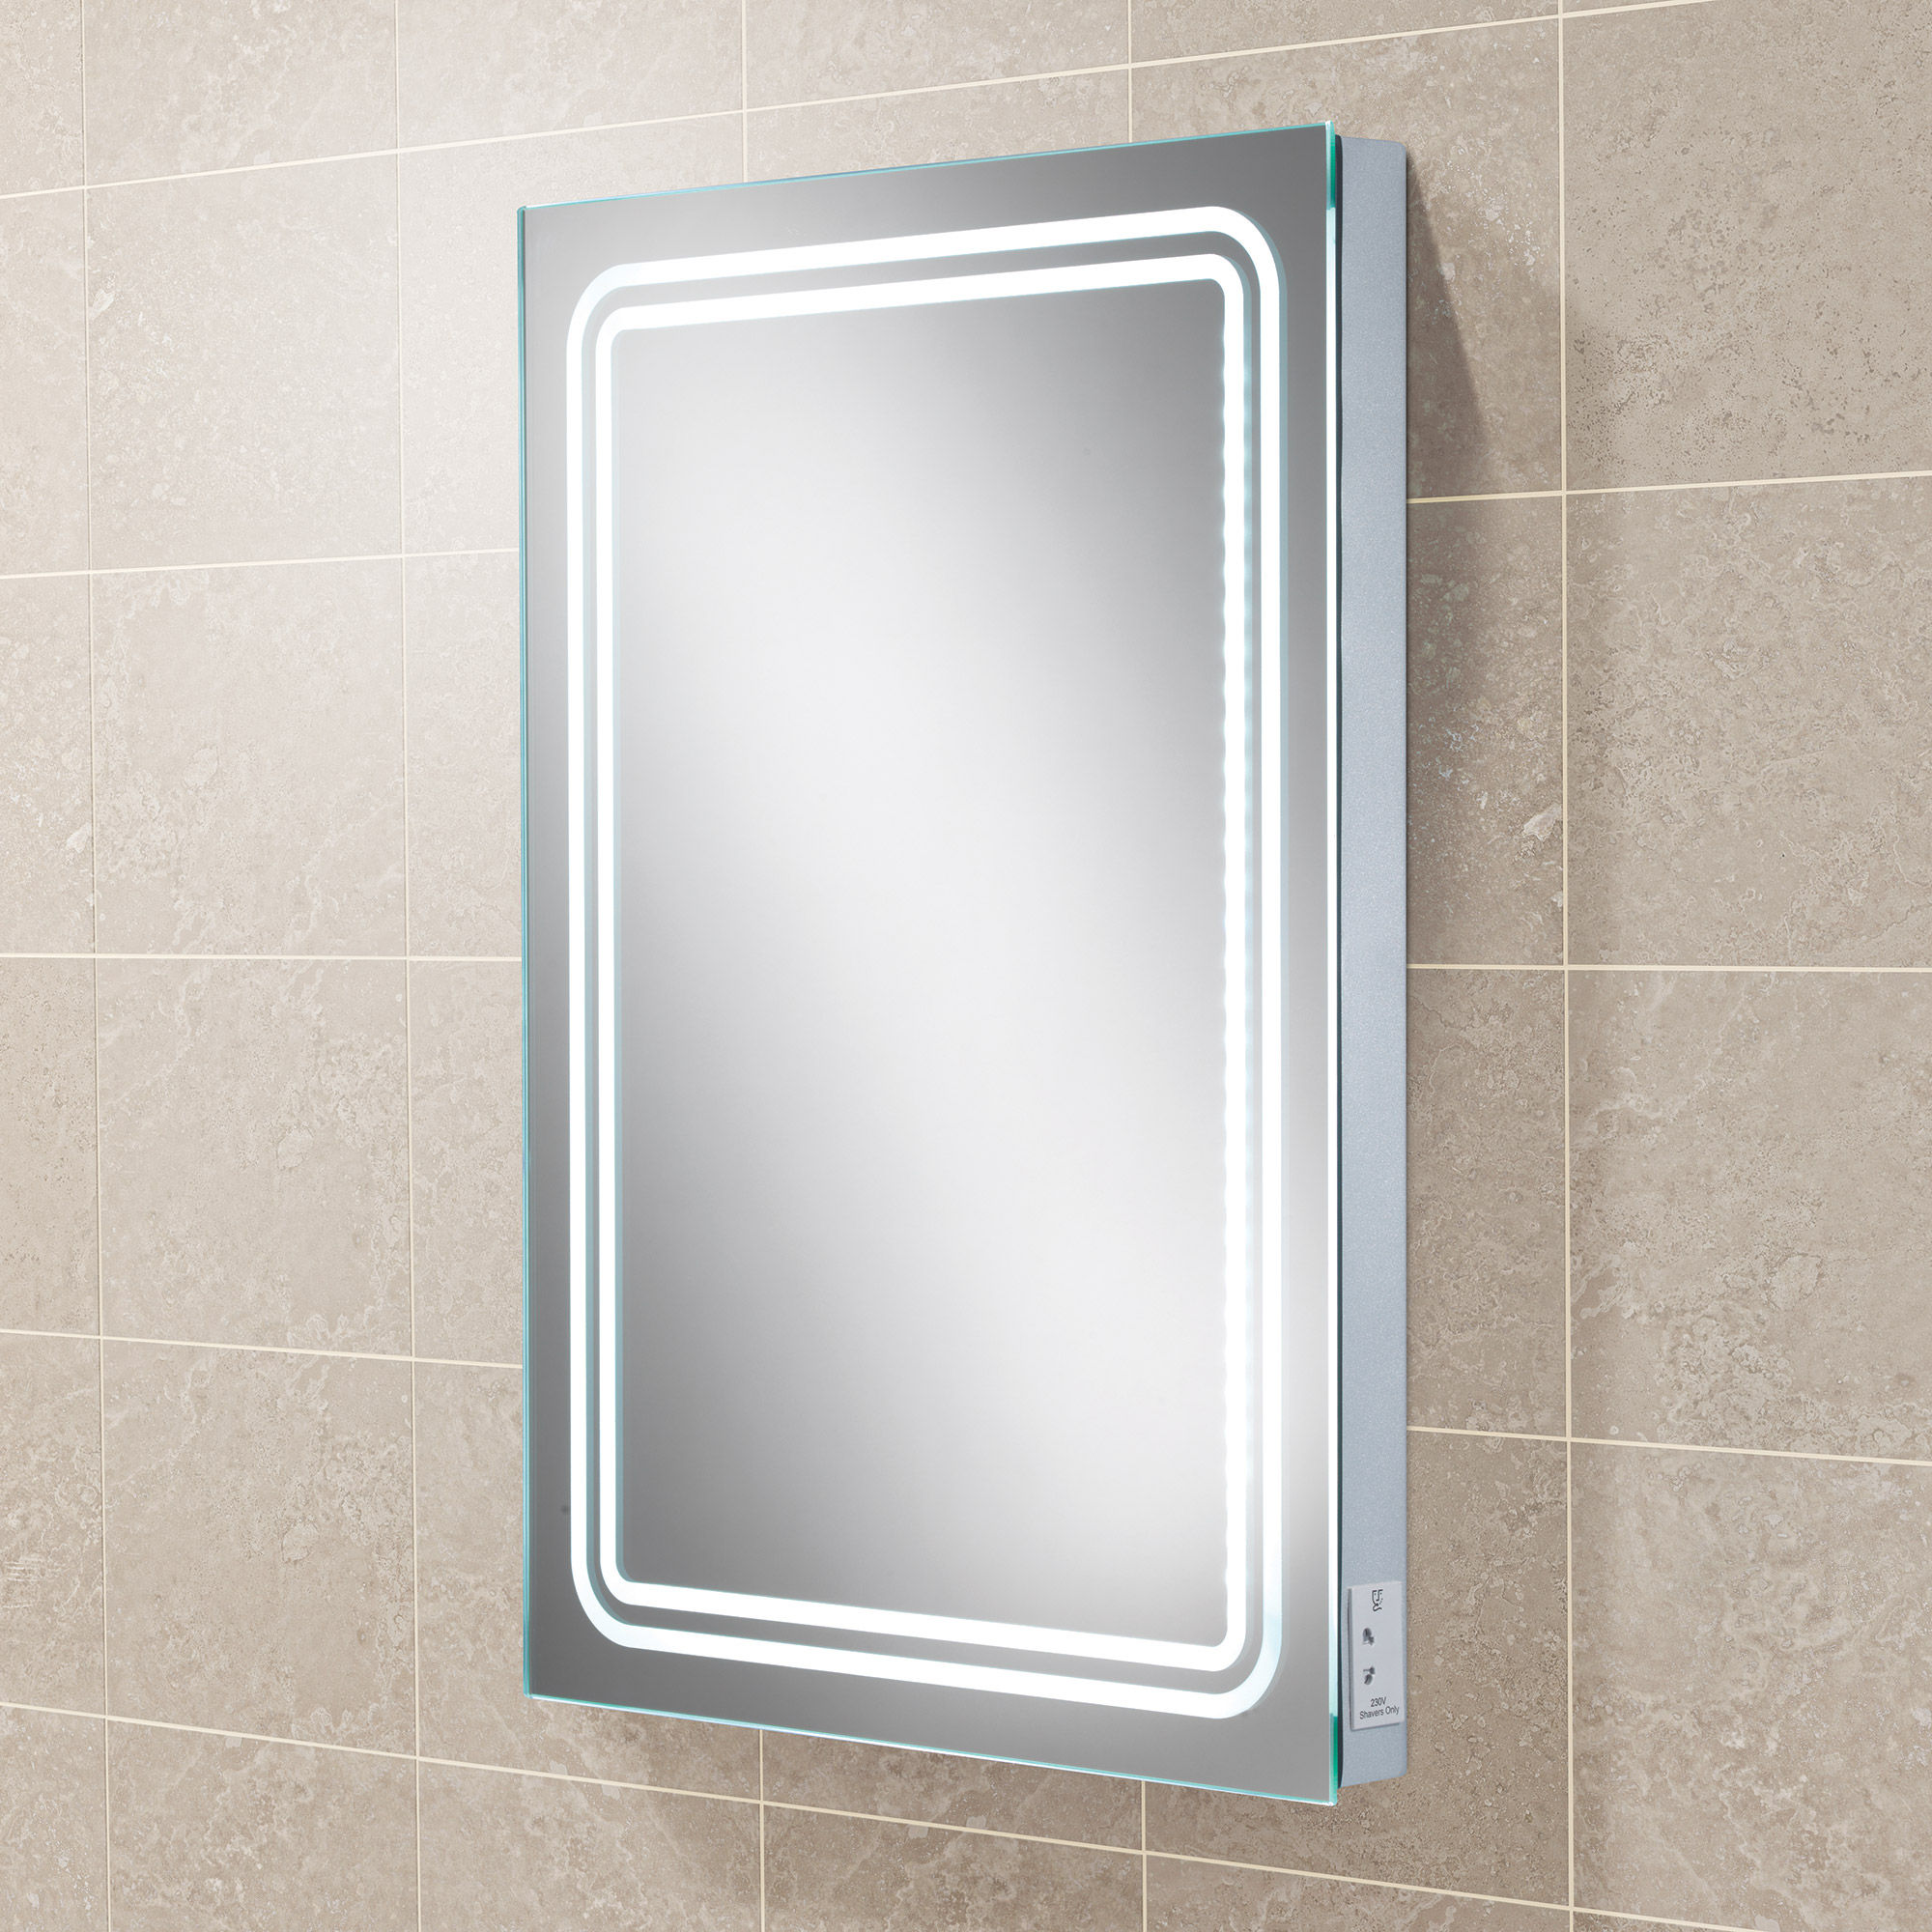 HIB Rotary LED Bathroom Mirror